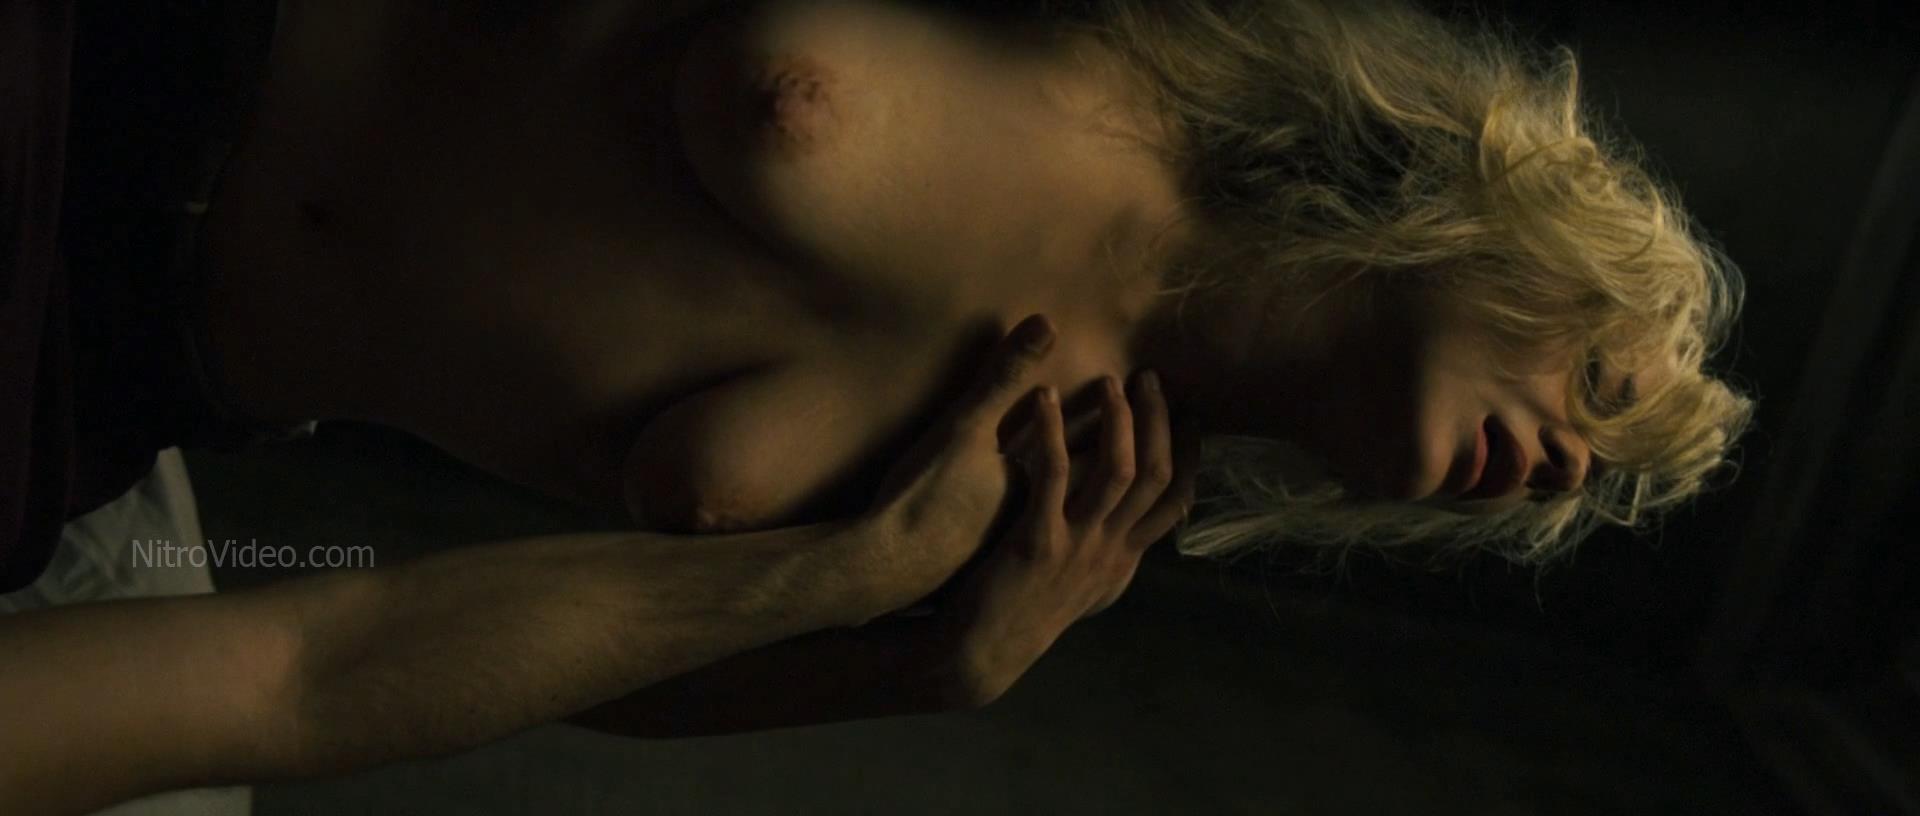 Marion Cotillard Nude In La Boite Noire Video Clip 06 At